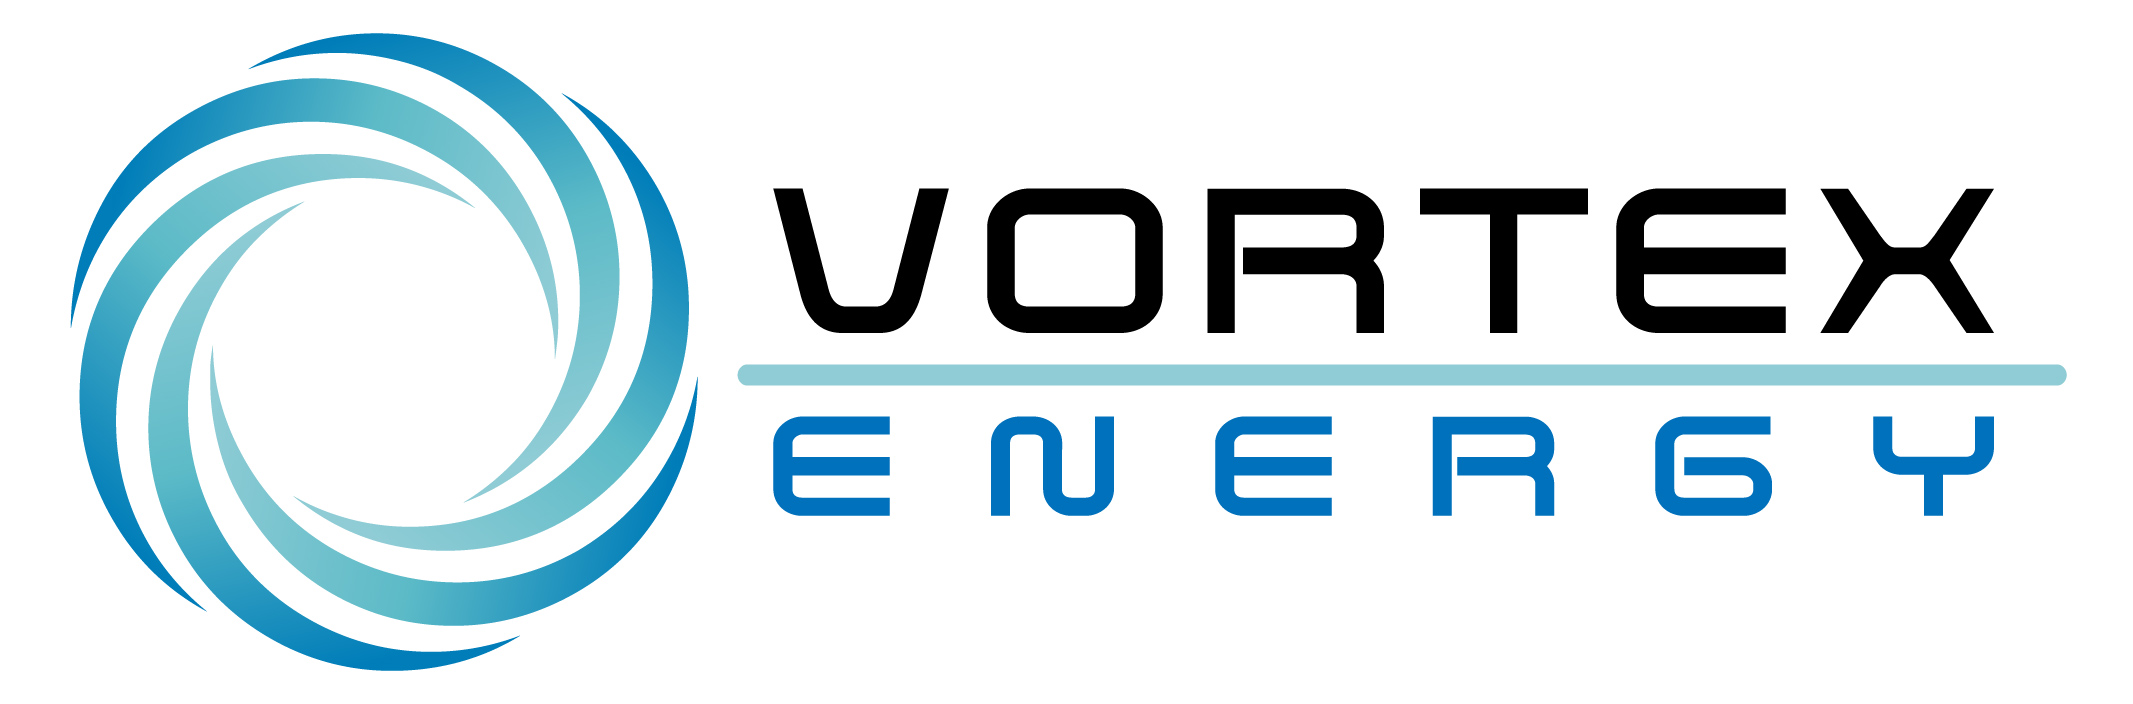 Vortex Energy logo